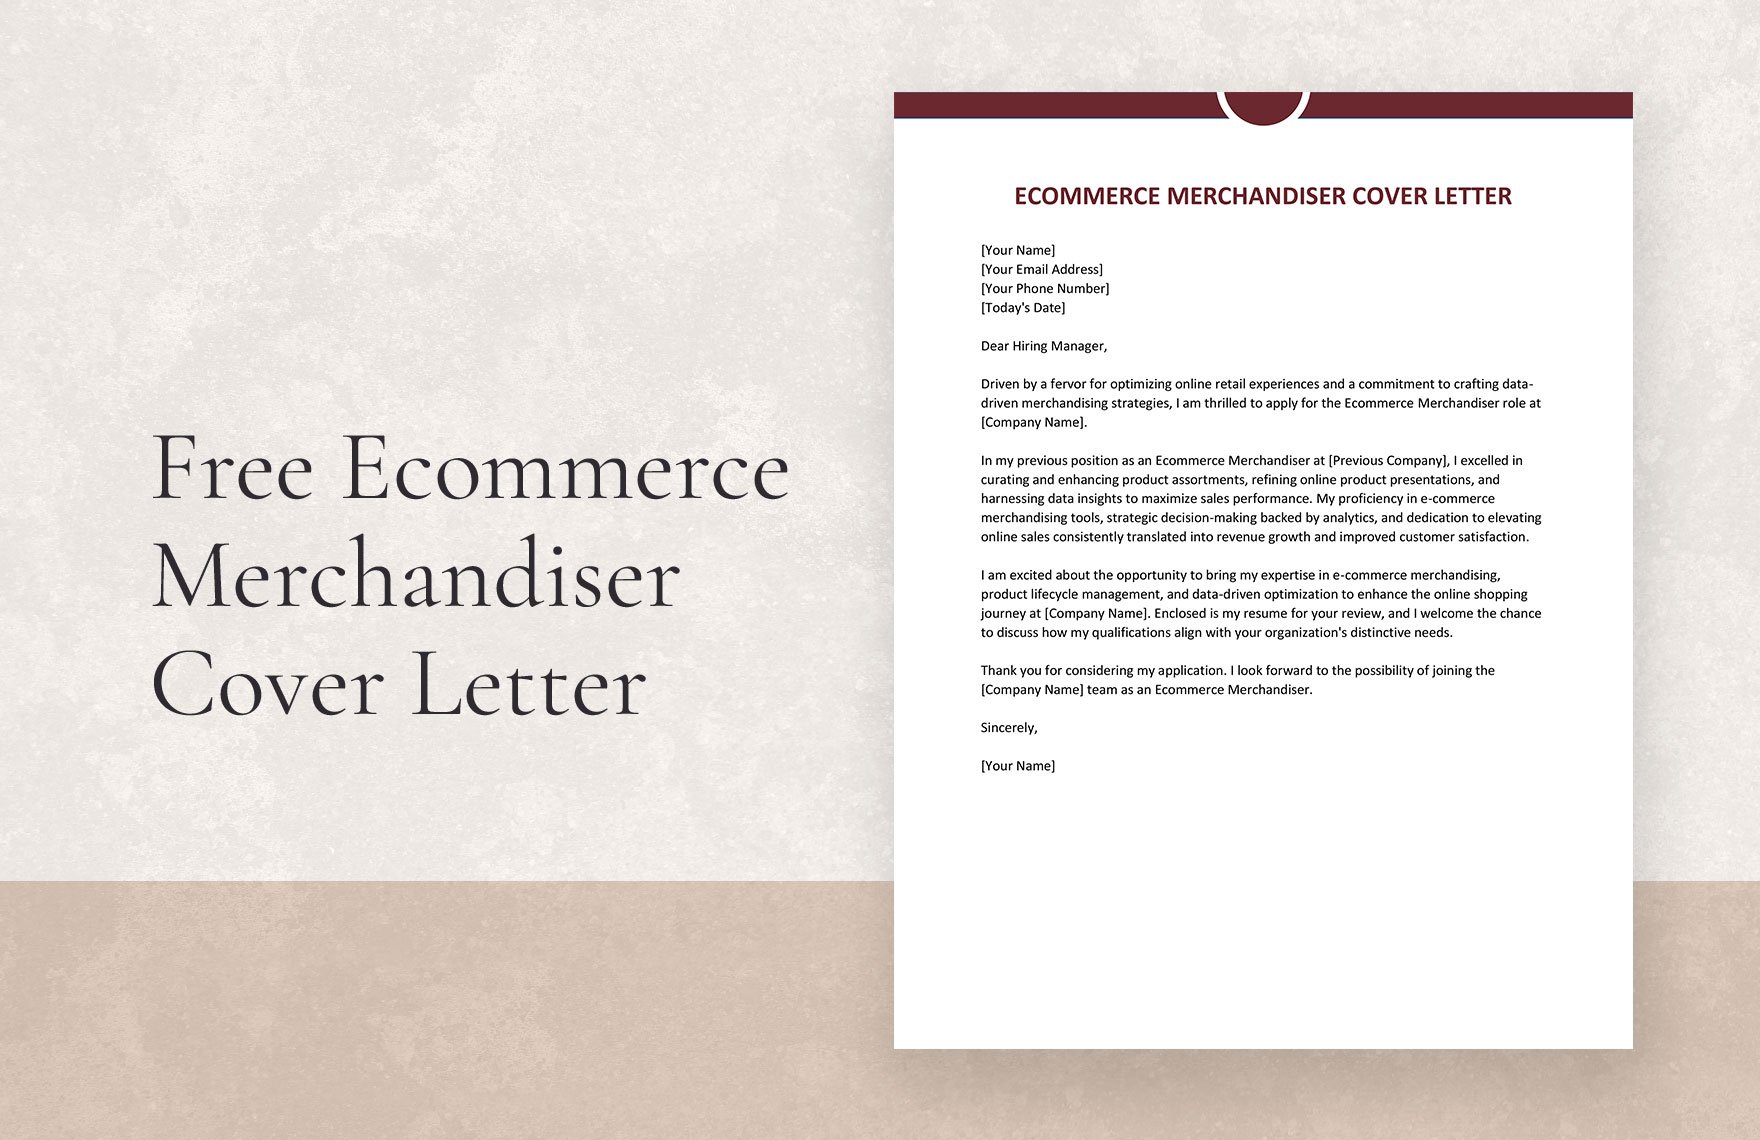 Ecommerce Merchandiser Cover Letter in Word, Google Docs